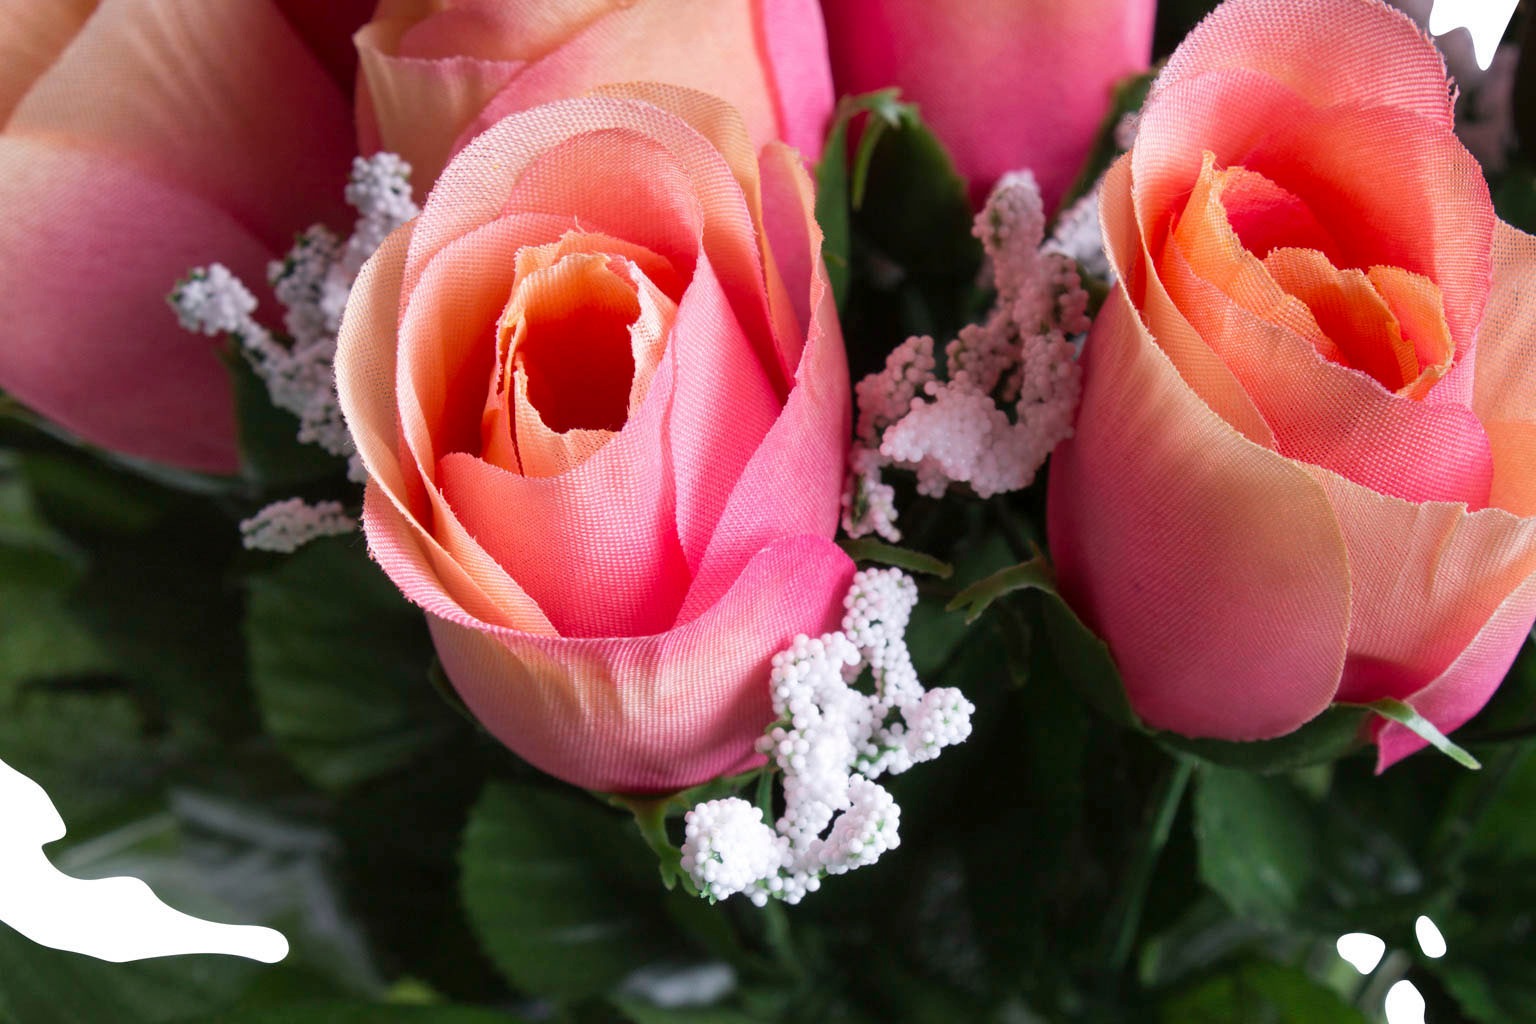 Botanic-Haus Kunstblume »Rosenstrauß mit 36 Rosen«